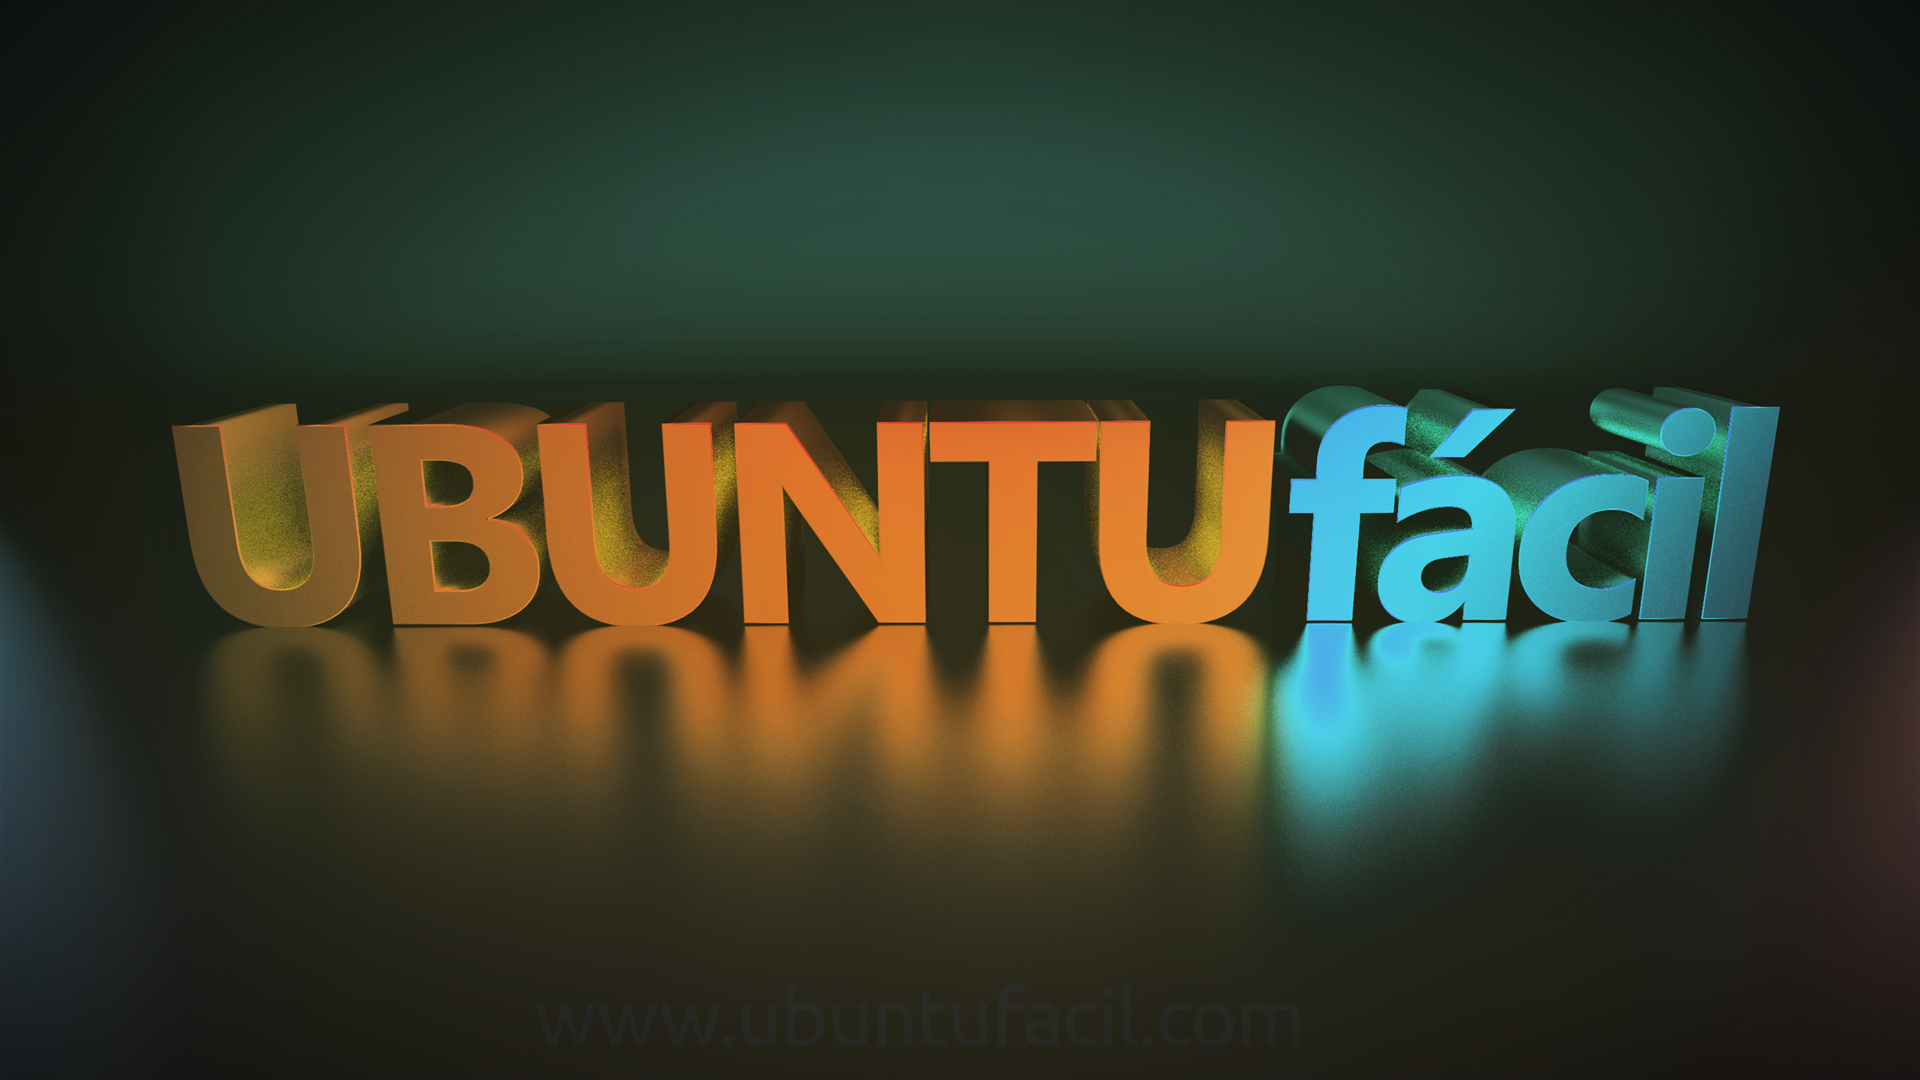 ubuntu-facil-blender-wallpaper-1080p-1